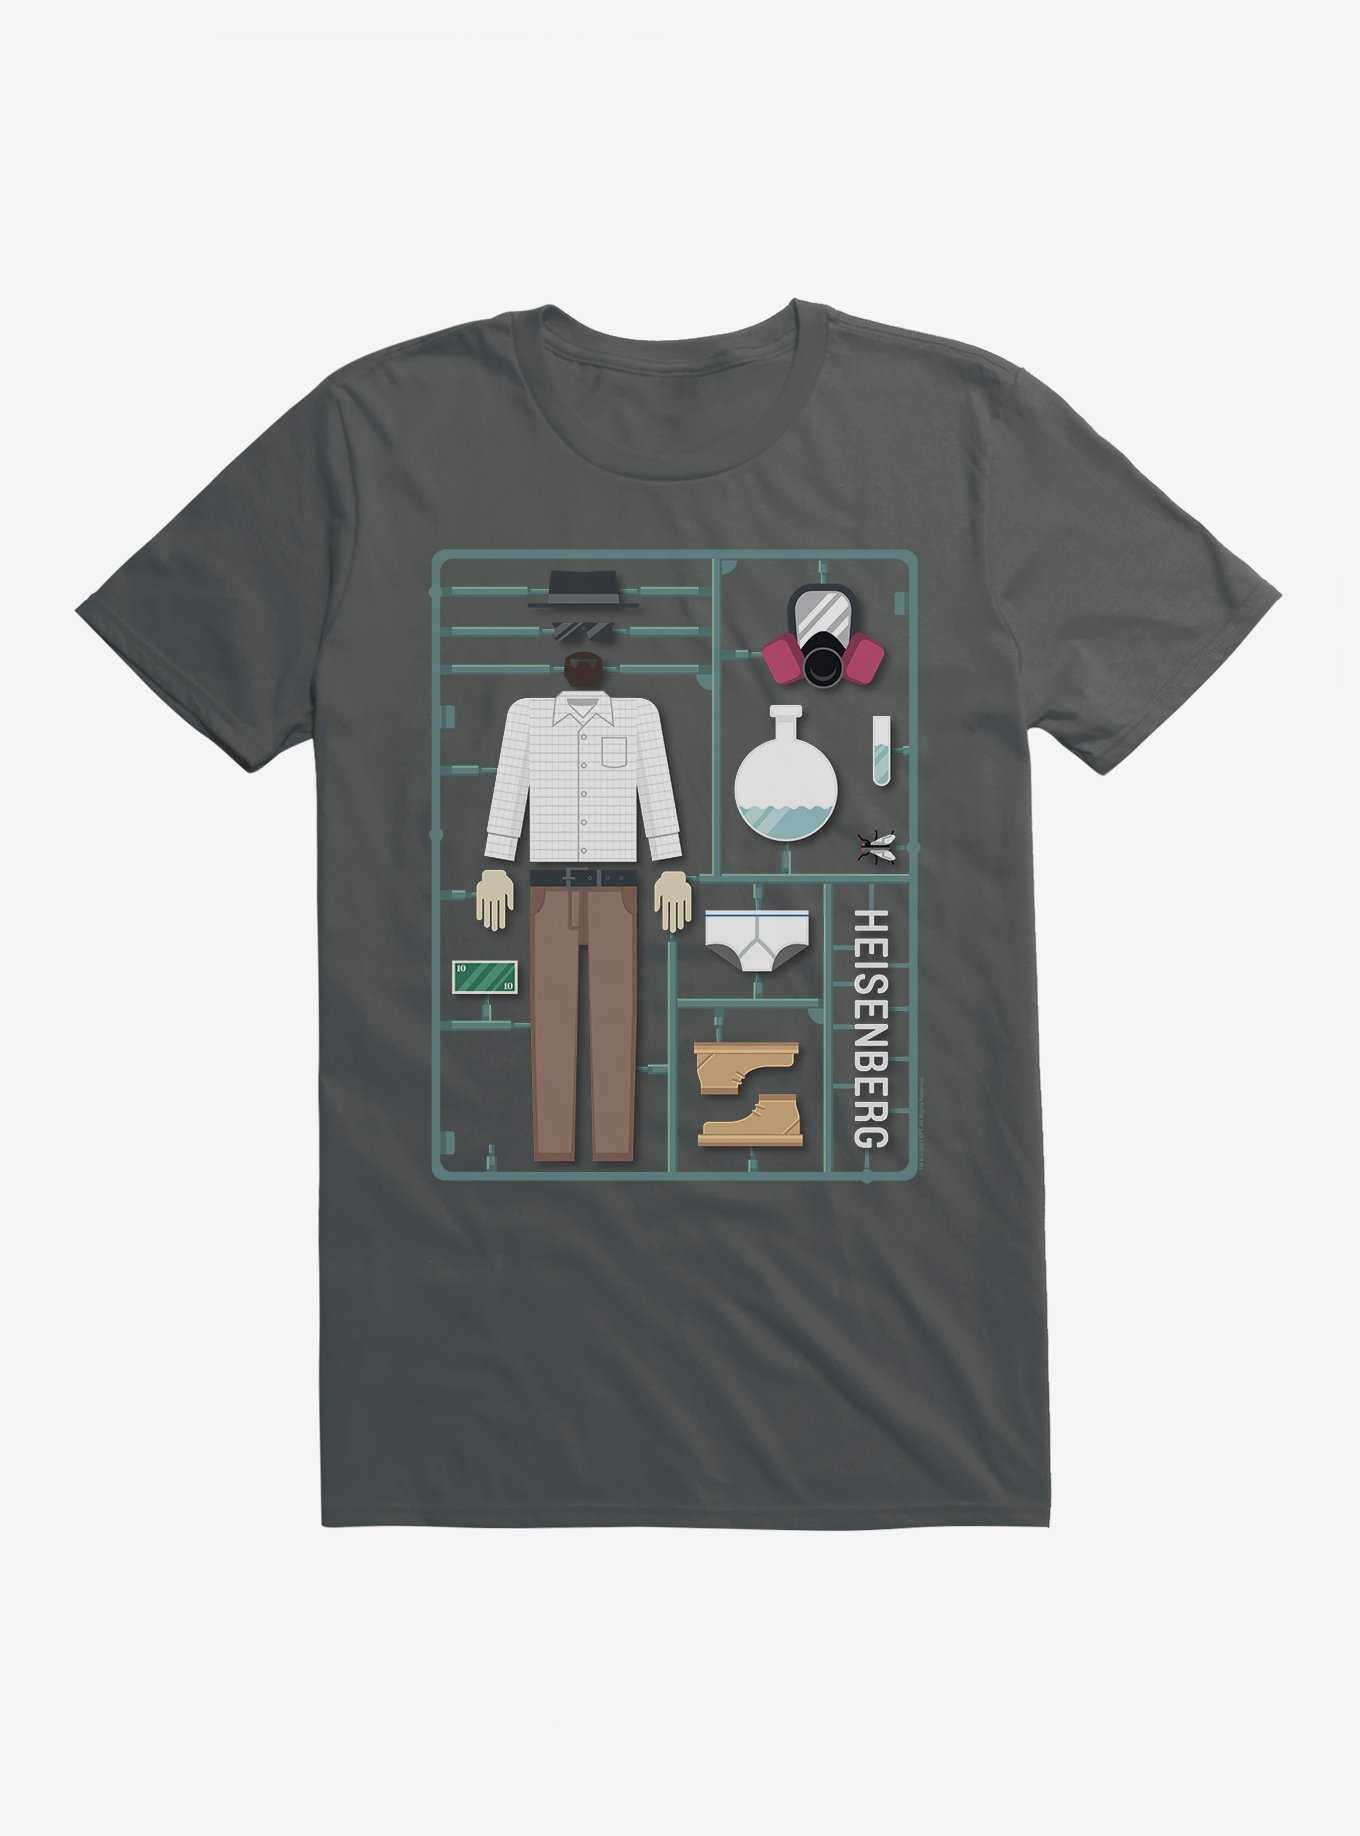 Breaking Bad Heisenberg Action Figure T-Shirt, , hi-res